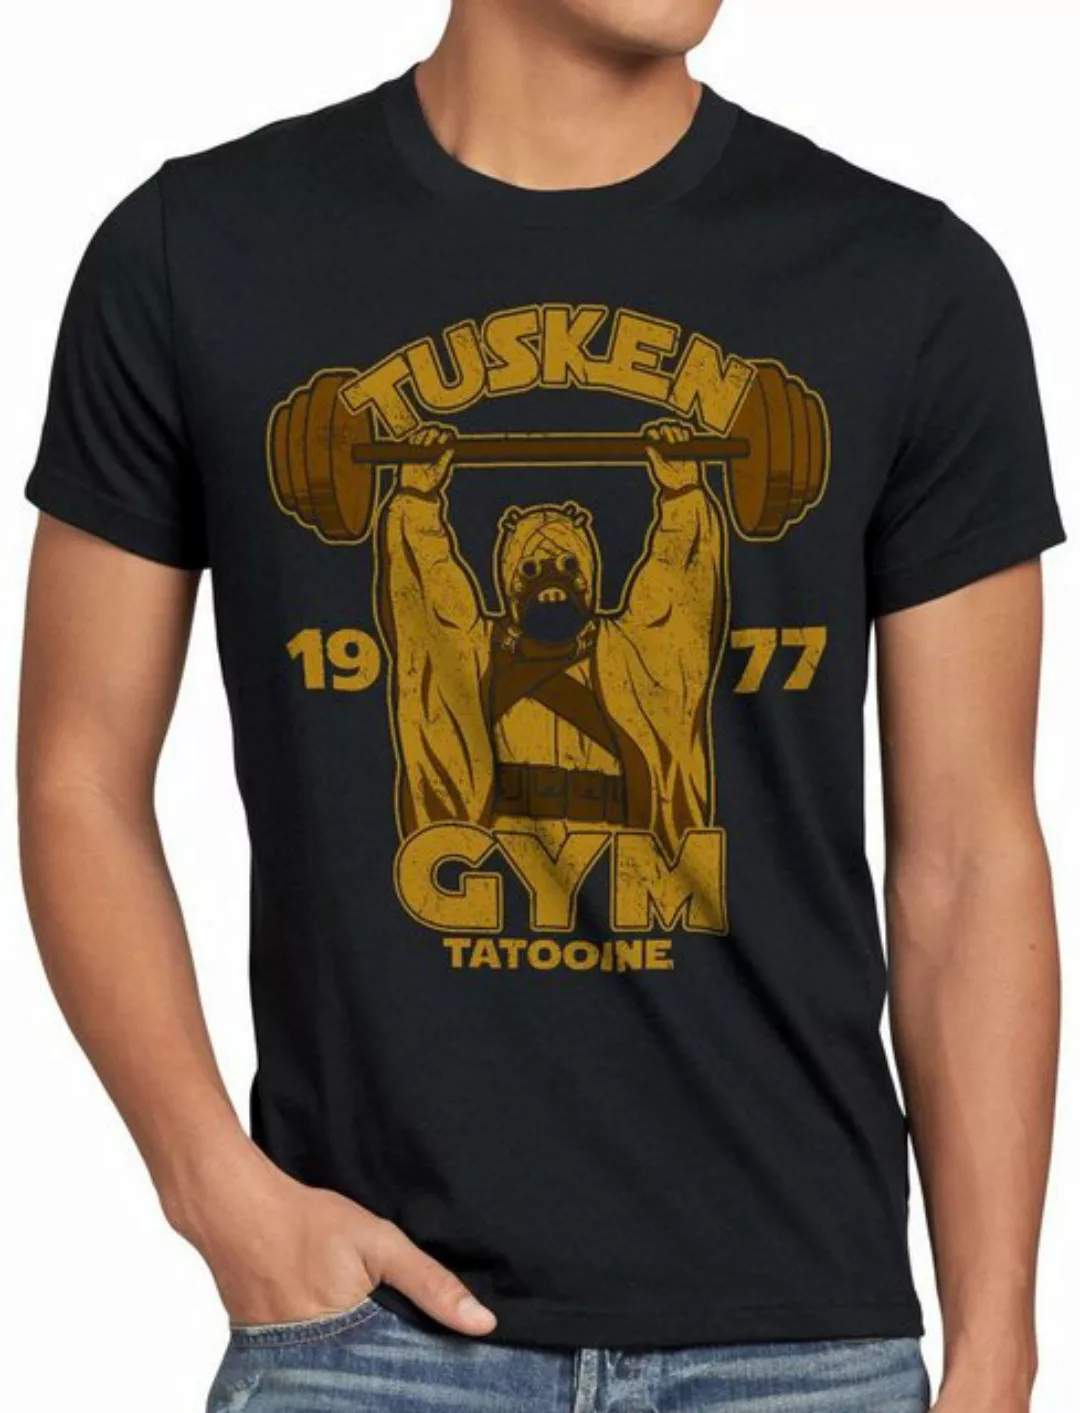 style3 Print-Shirt Herren T-Shirt Tatooine Gym räuber droide crossfit studi günstig online kaufen